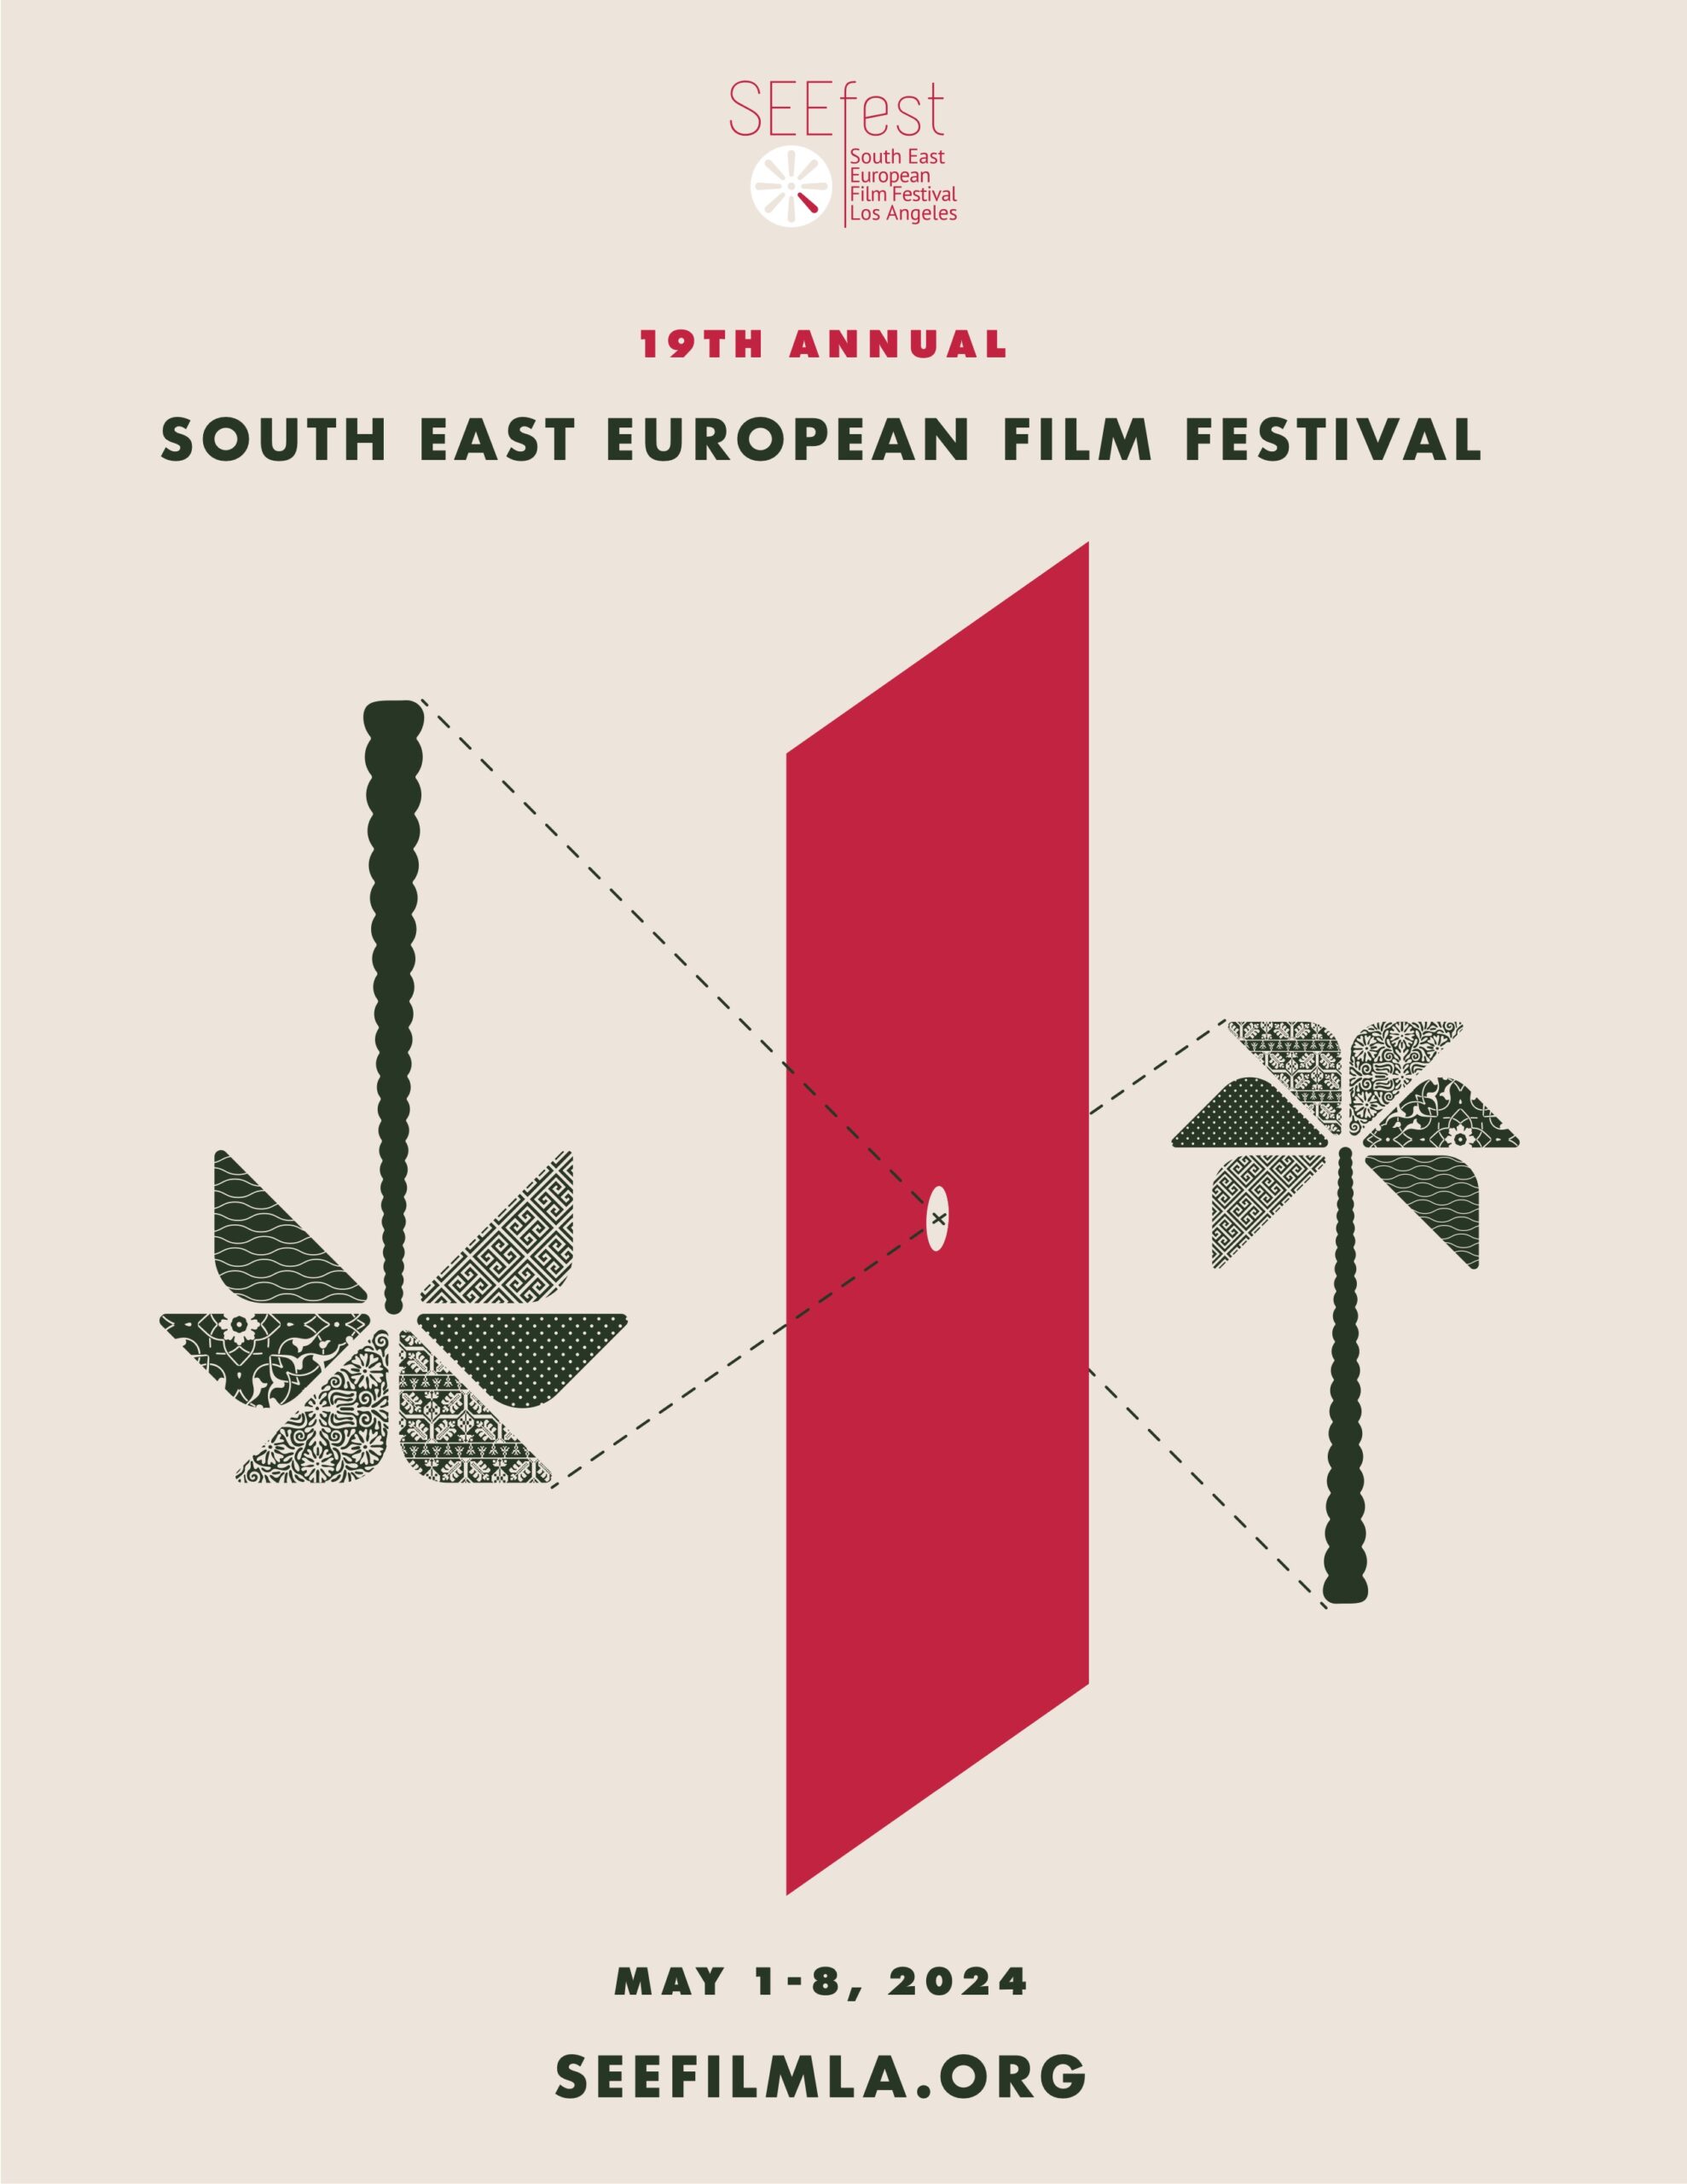 19TH ANNUAL SOUTH EAST EUROPEAN FILM FESTIVAL (SEEfest) ANNOUNCES FULL PROGRAM LINE-UP of 54 FILMS